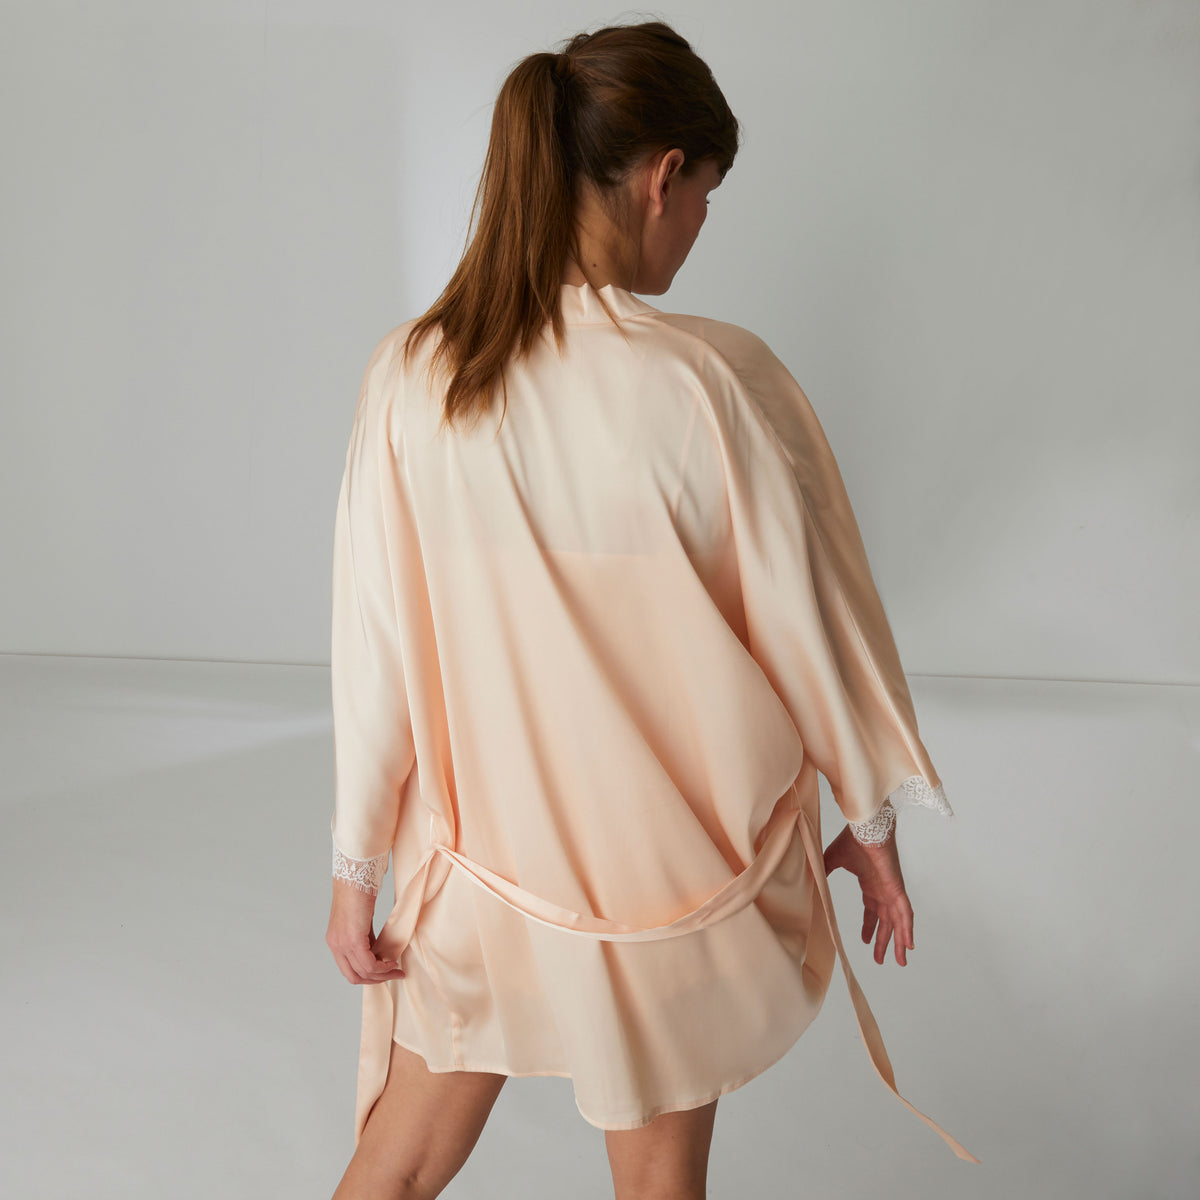 Simone Perele Satin Secrets Robe - Size Large Left